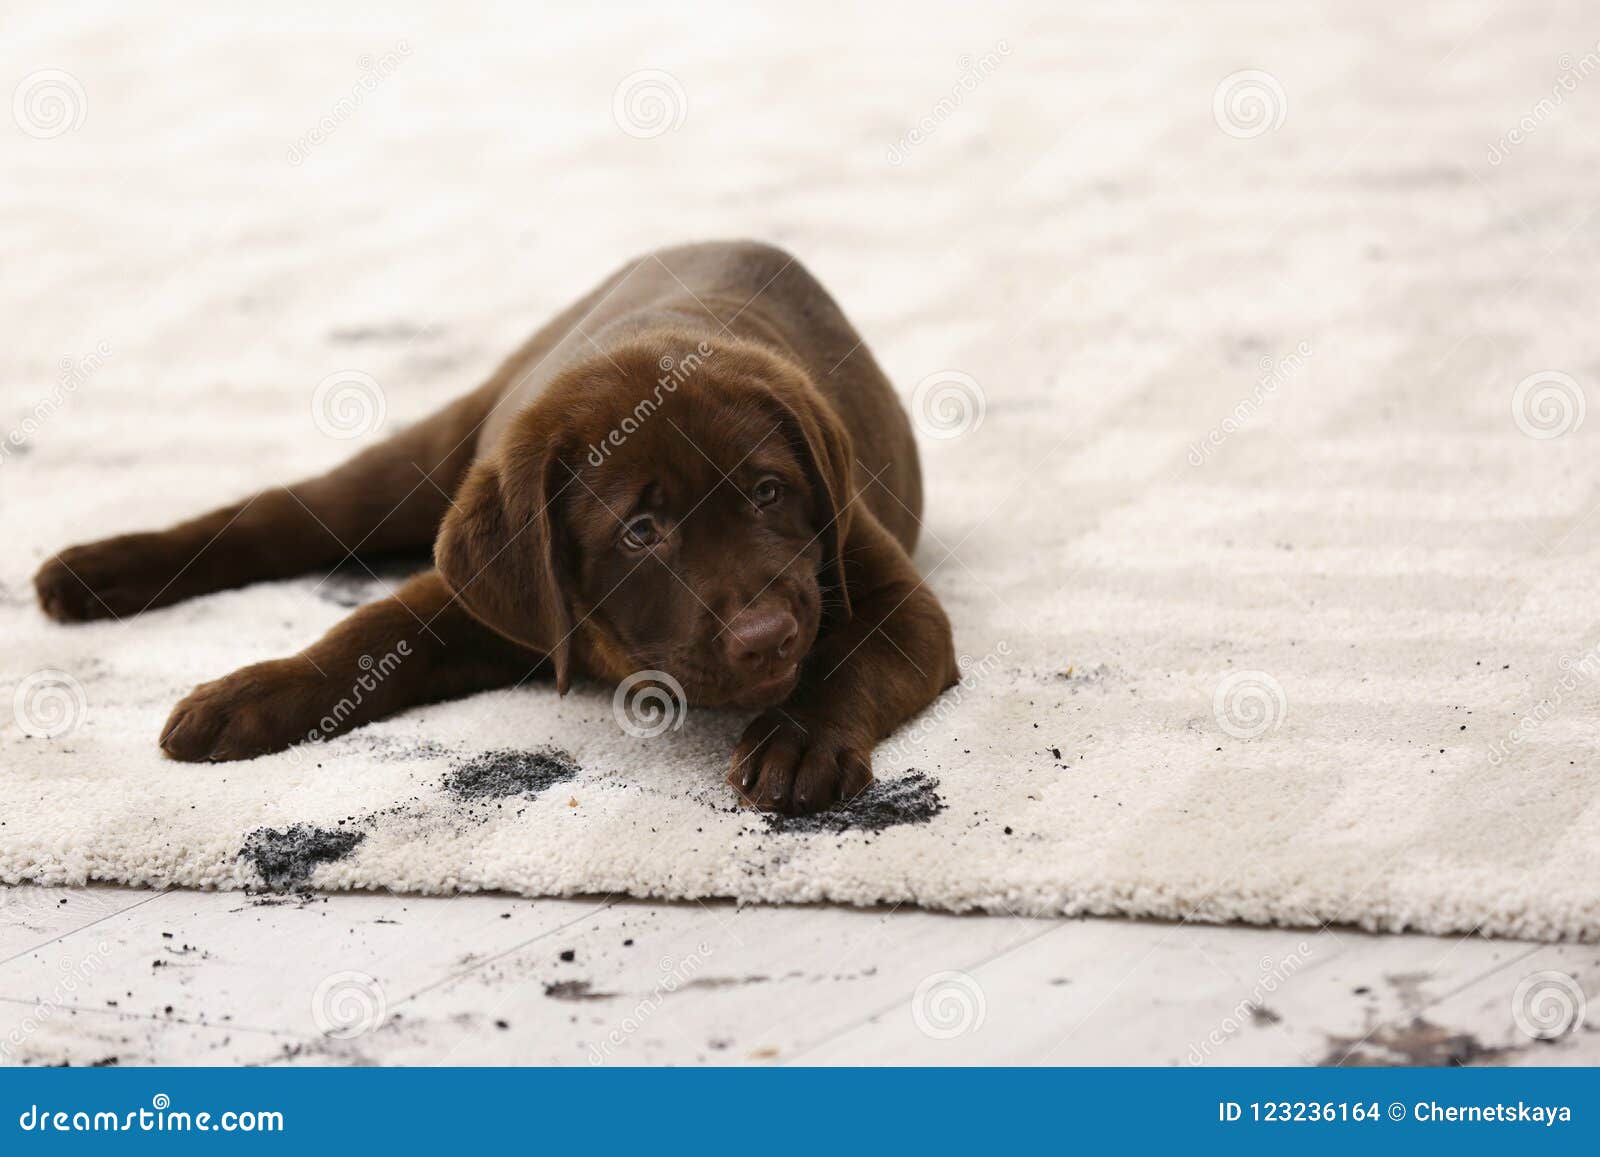 cute dog leaving muddy paw prints